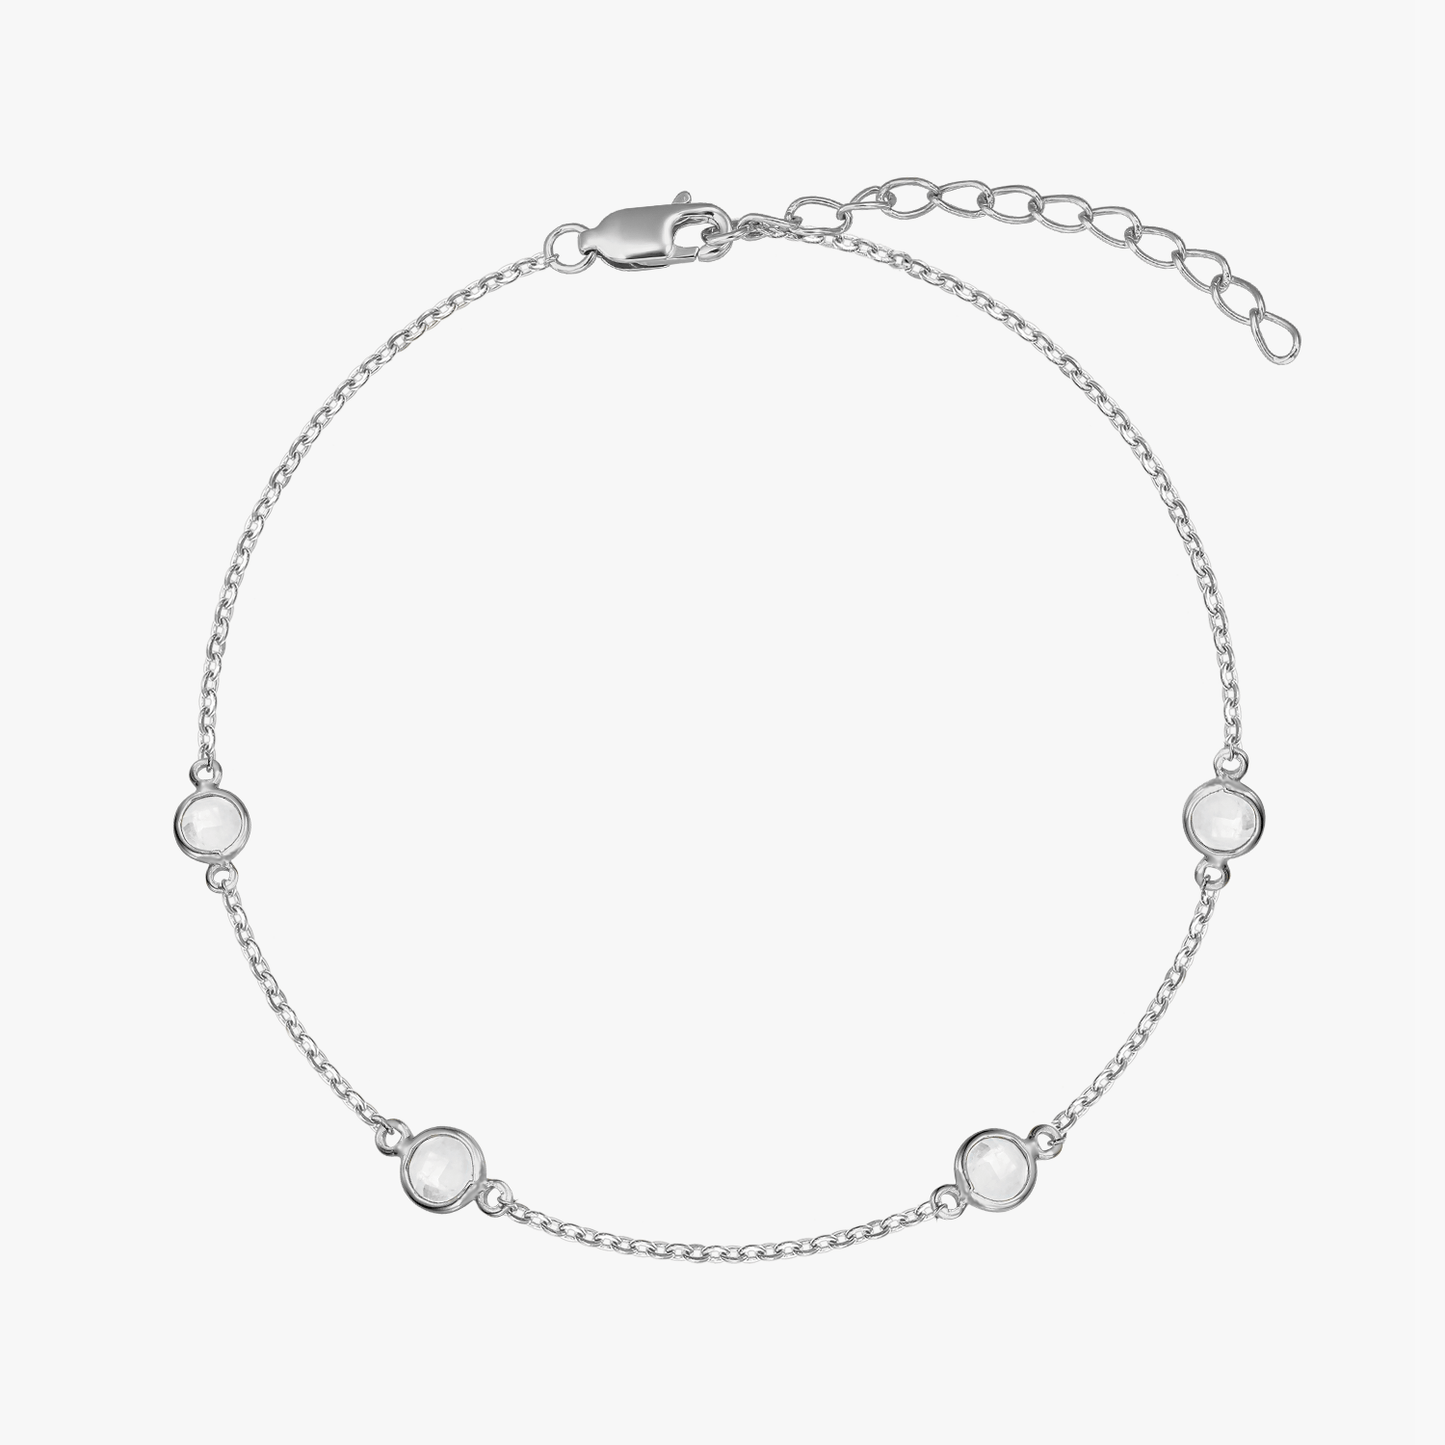 April Birthstone Silver Bracelet - White Topaz